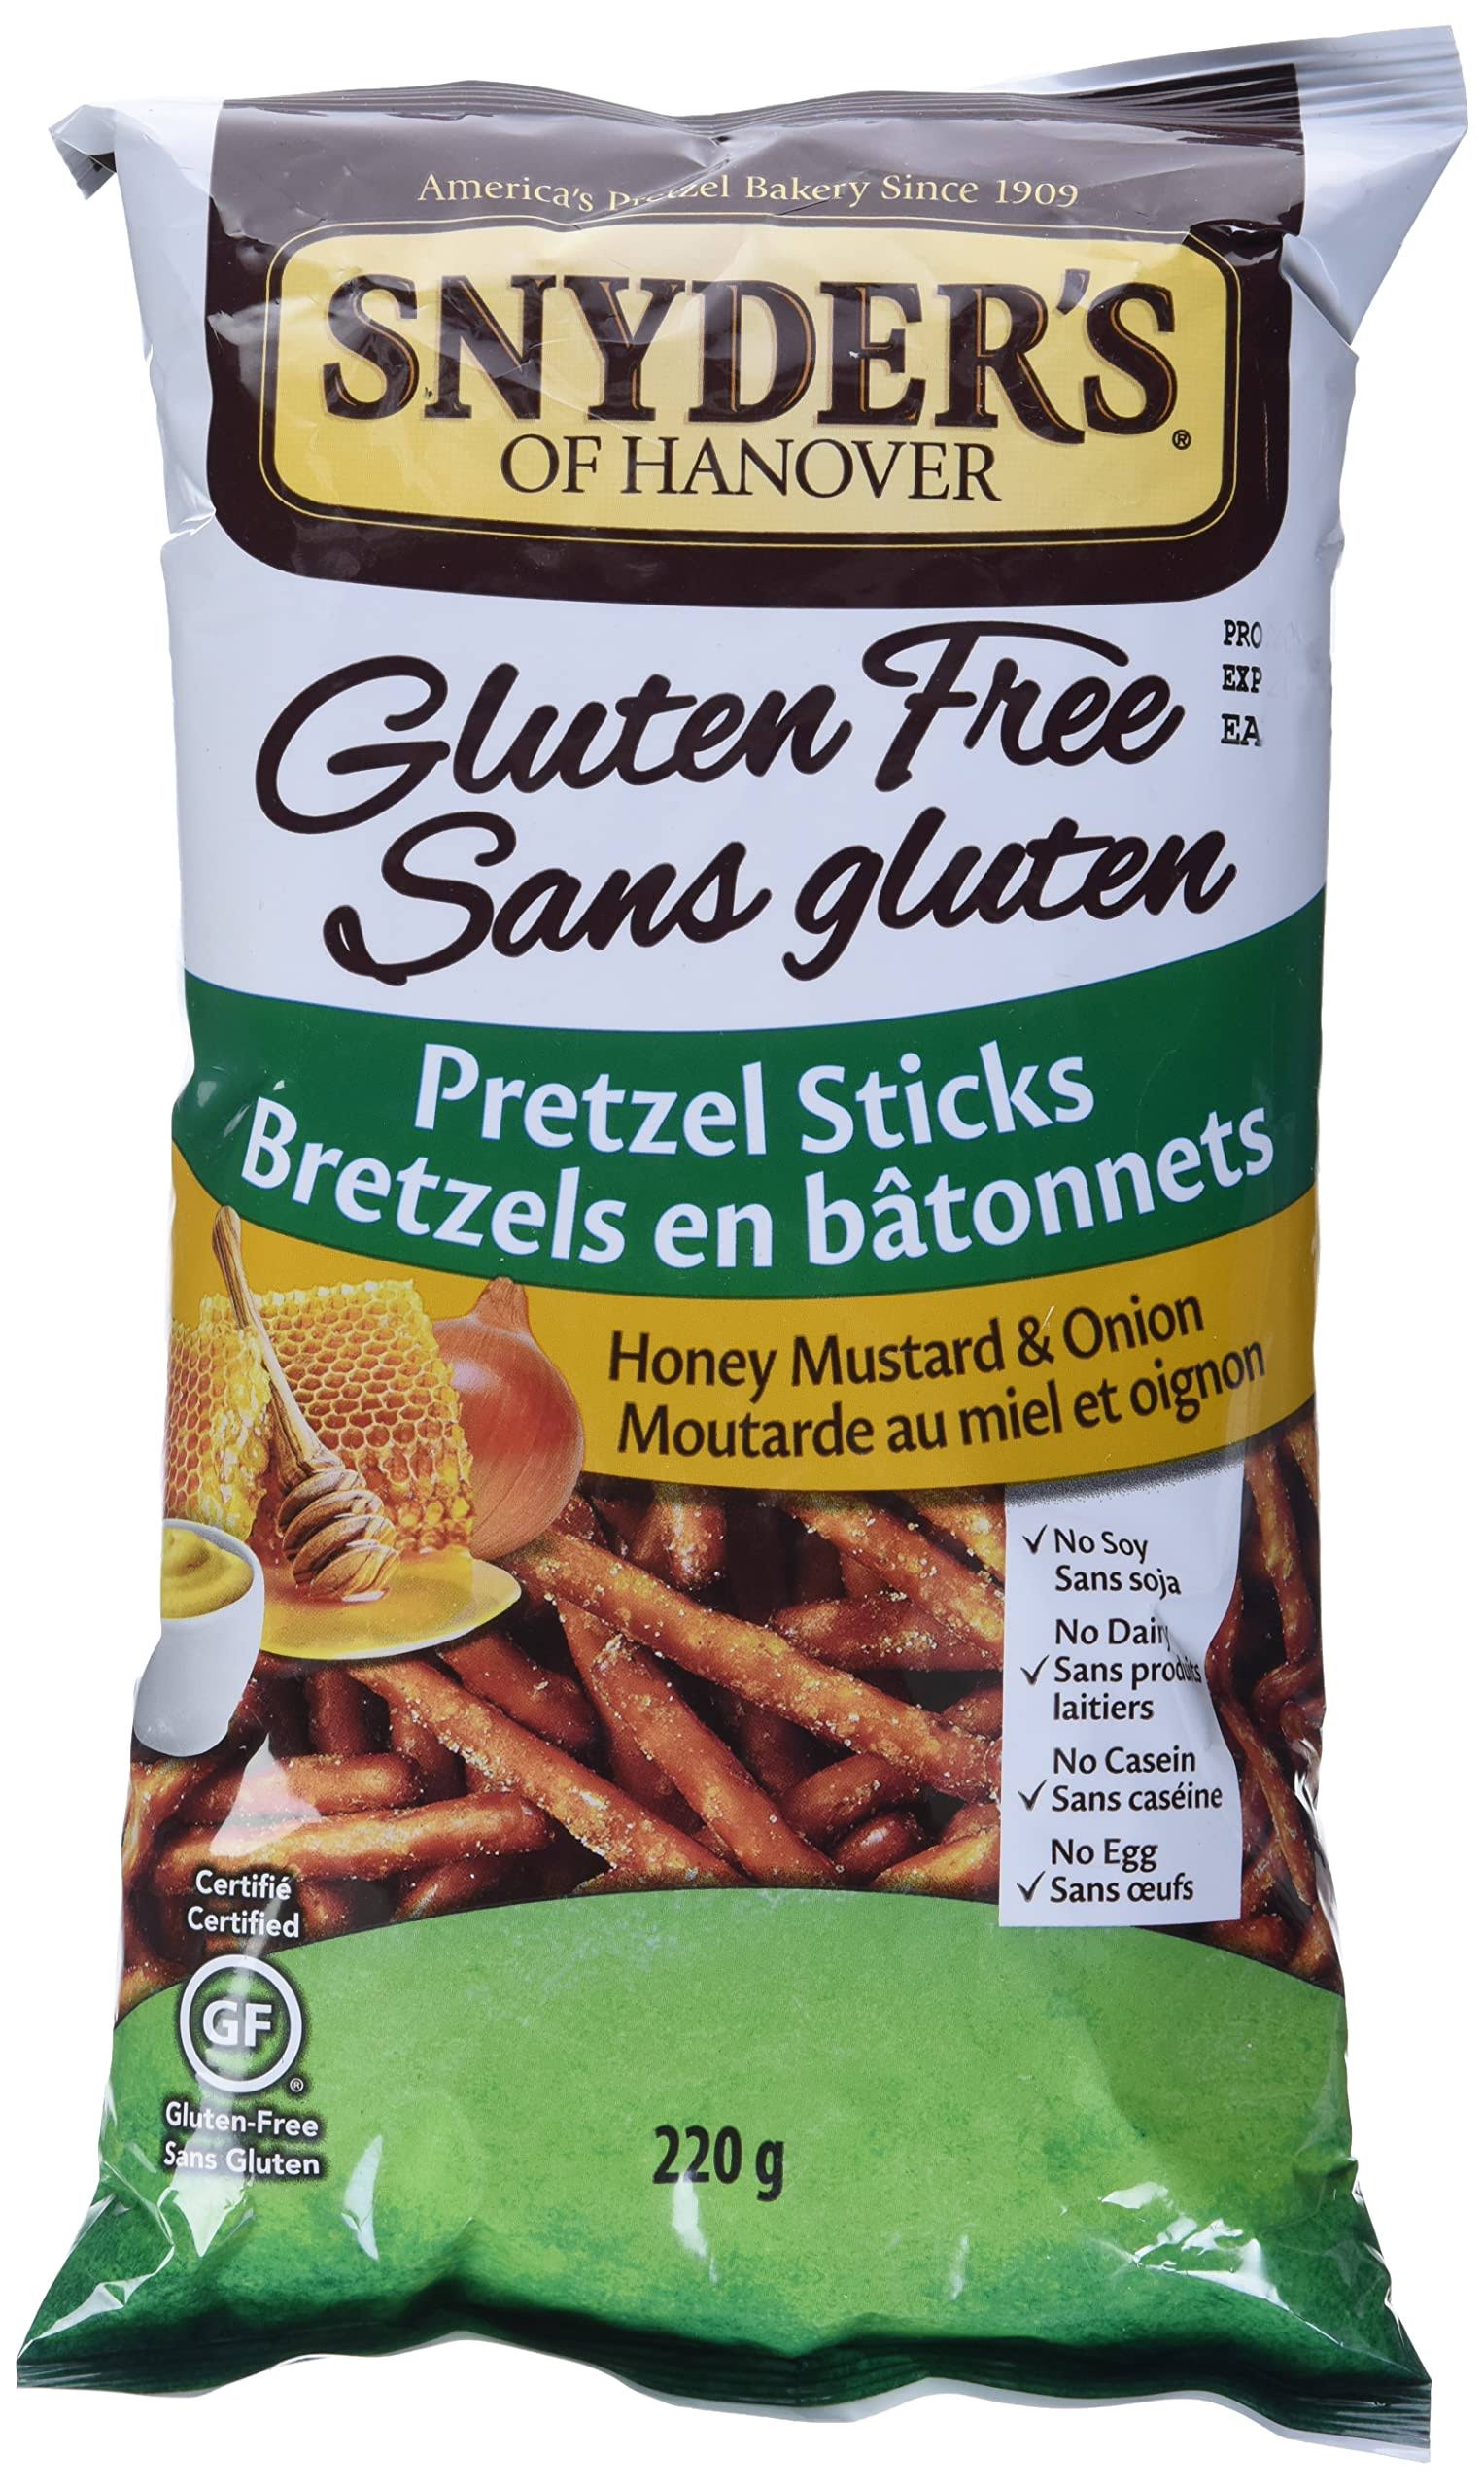 Snyder's of Hanover Gluten free Honey Mustard & Onion Pretzel - 220g